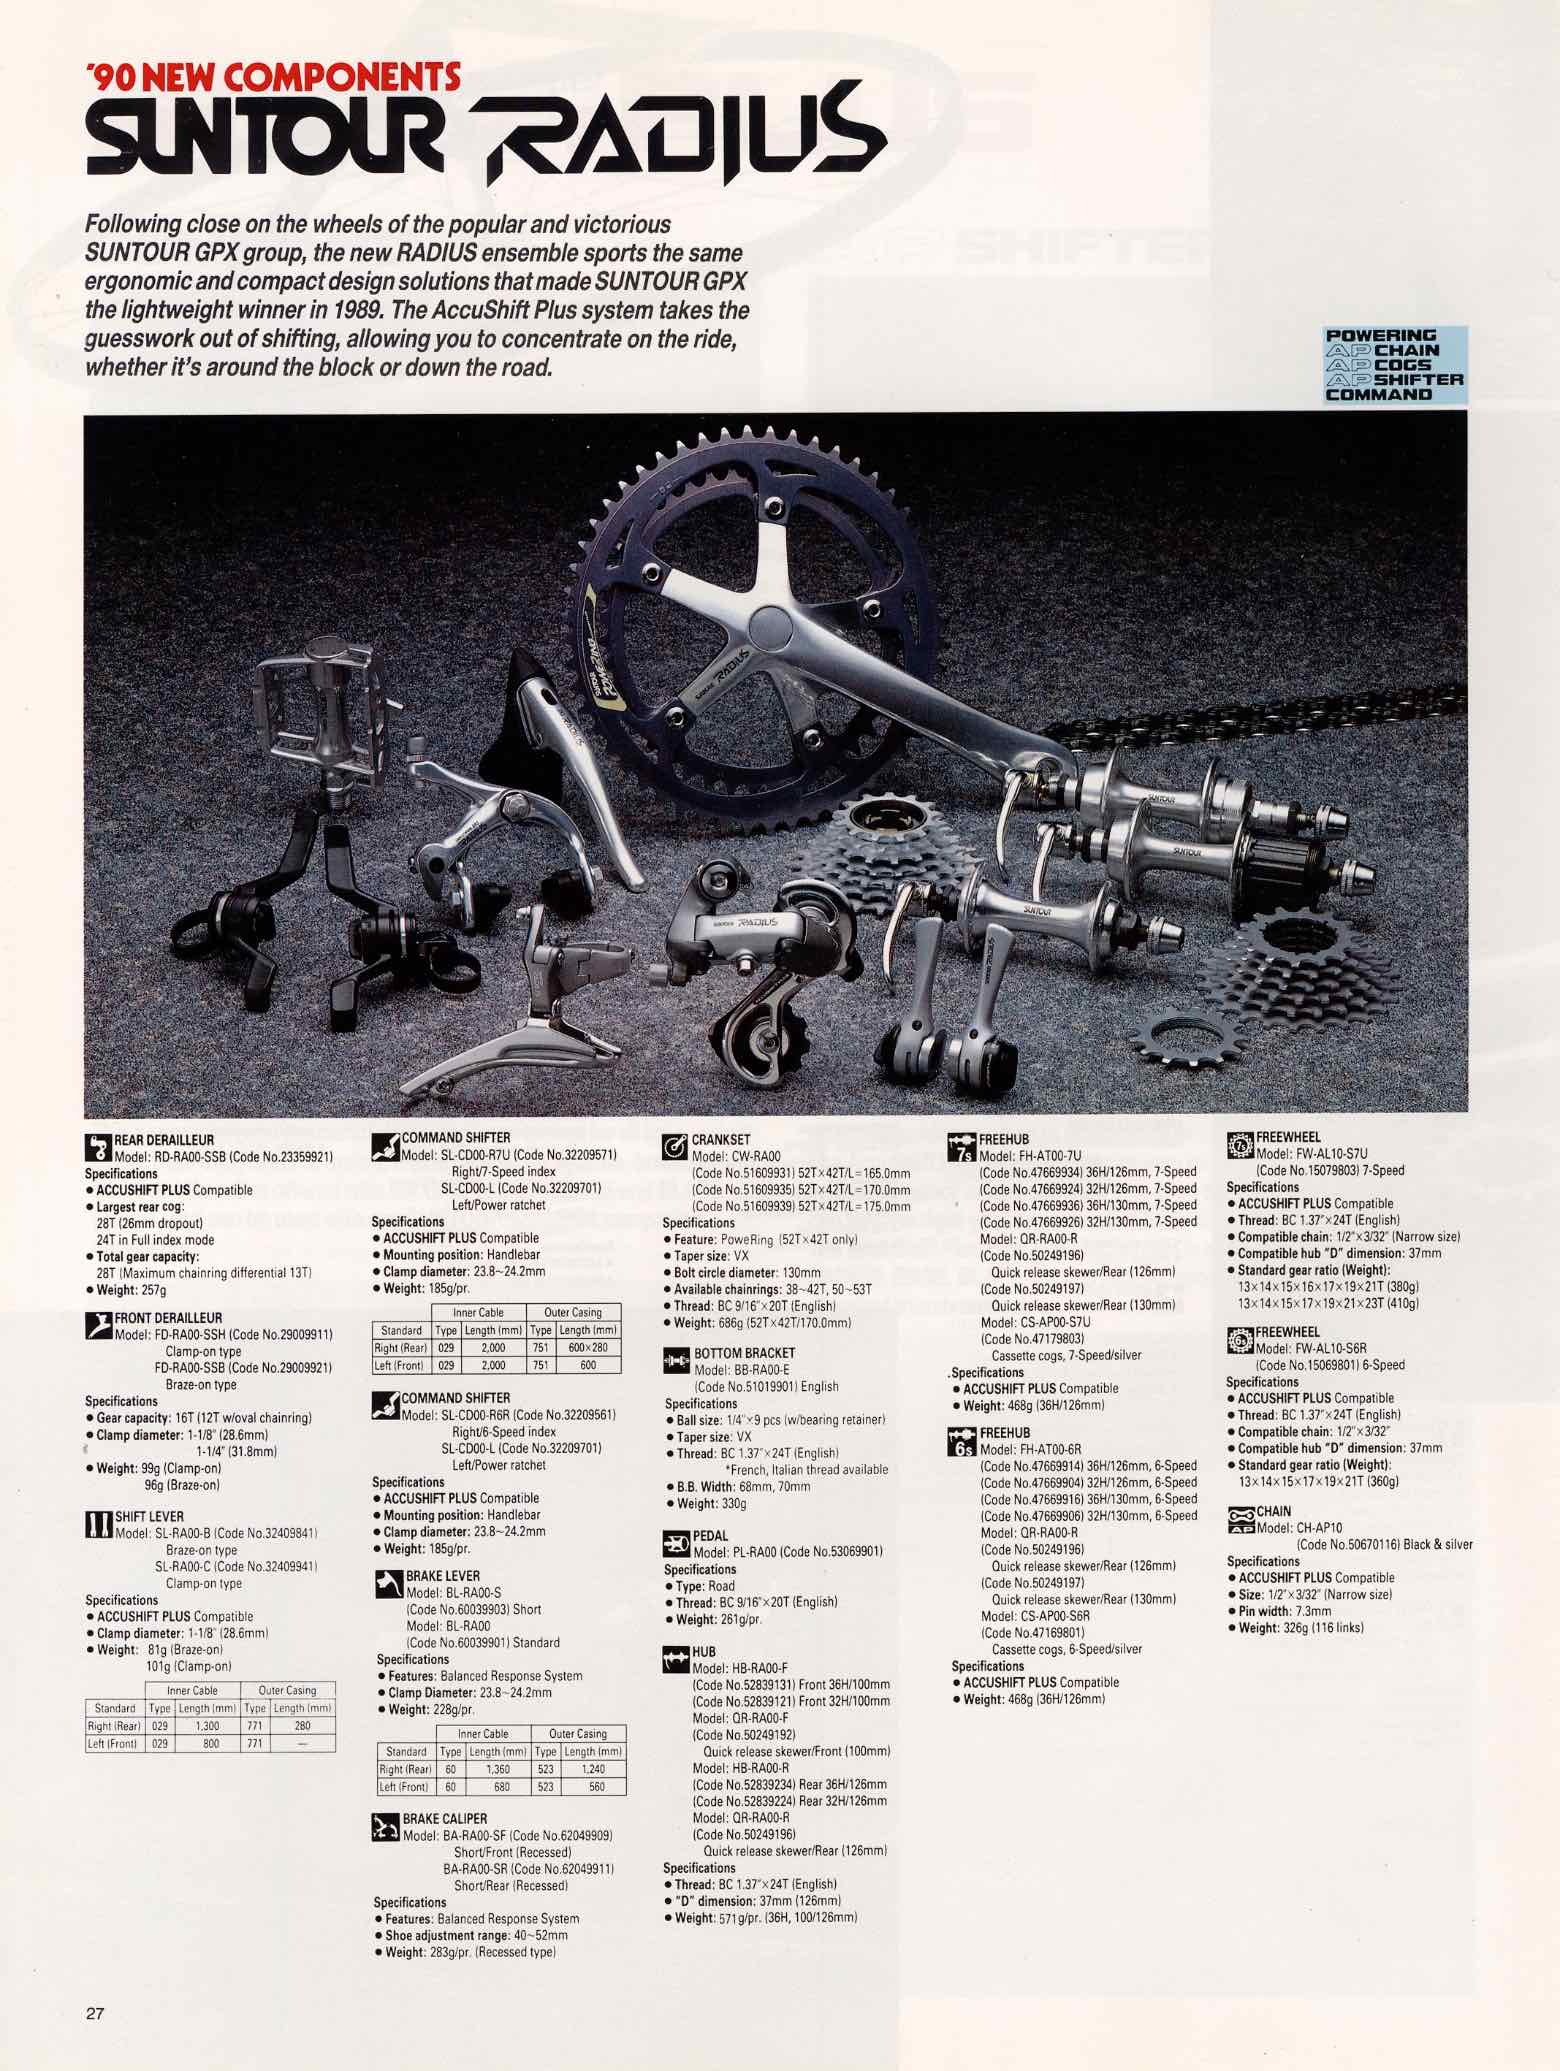 SunTour Bicycle Equipment Catalog 1990 - Page 27 main image